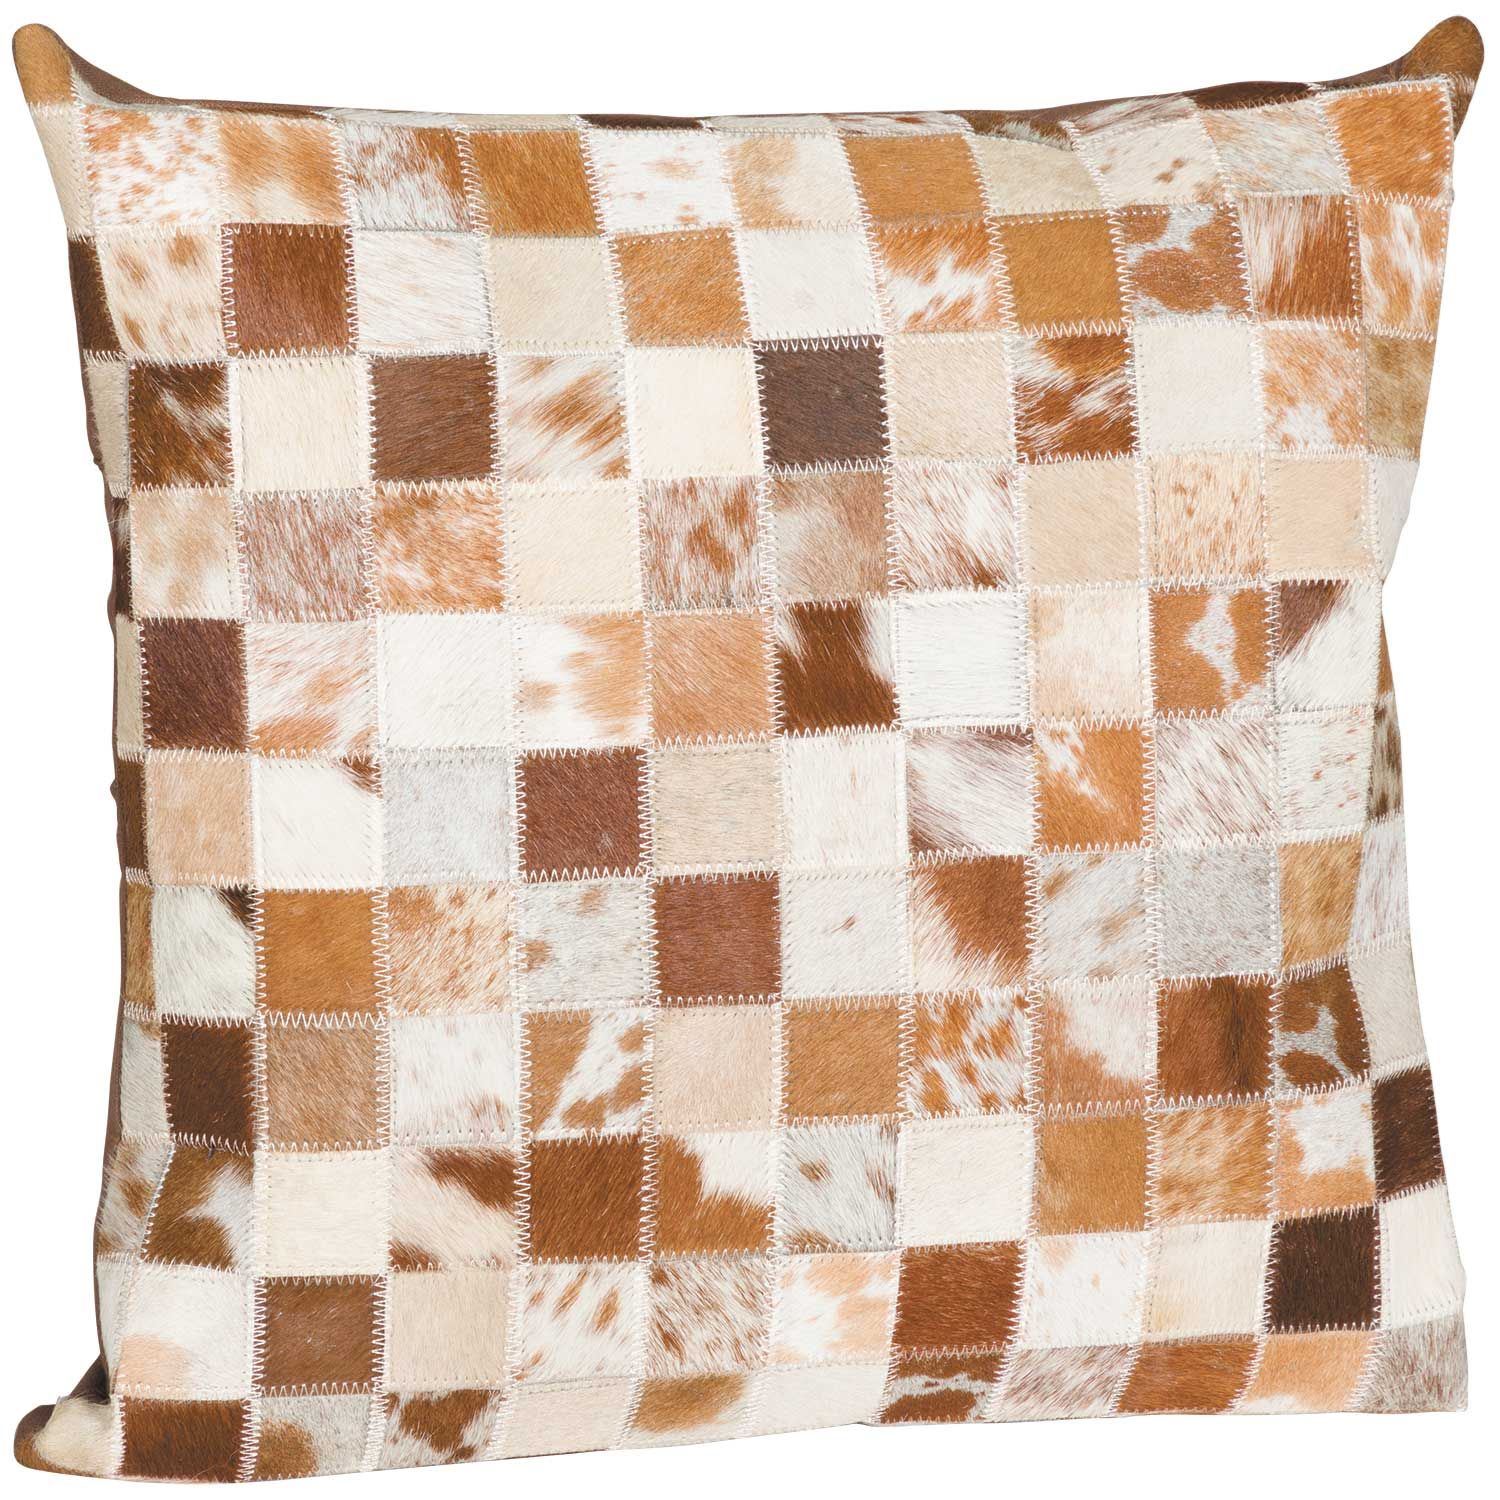 https://images.afw.com/images/thumbs/0097417_18x18-hide-blocks-decorative-pillow-p.jpeg